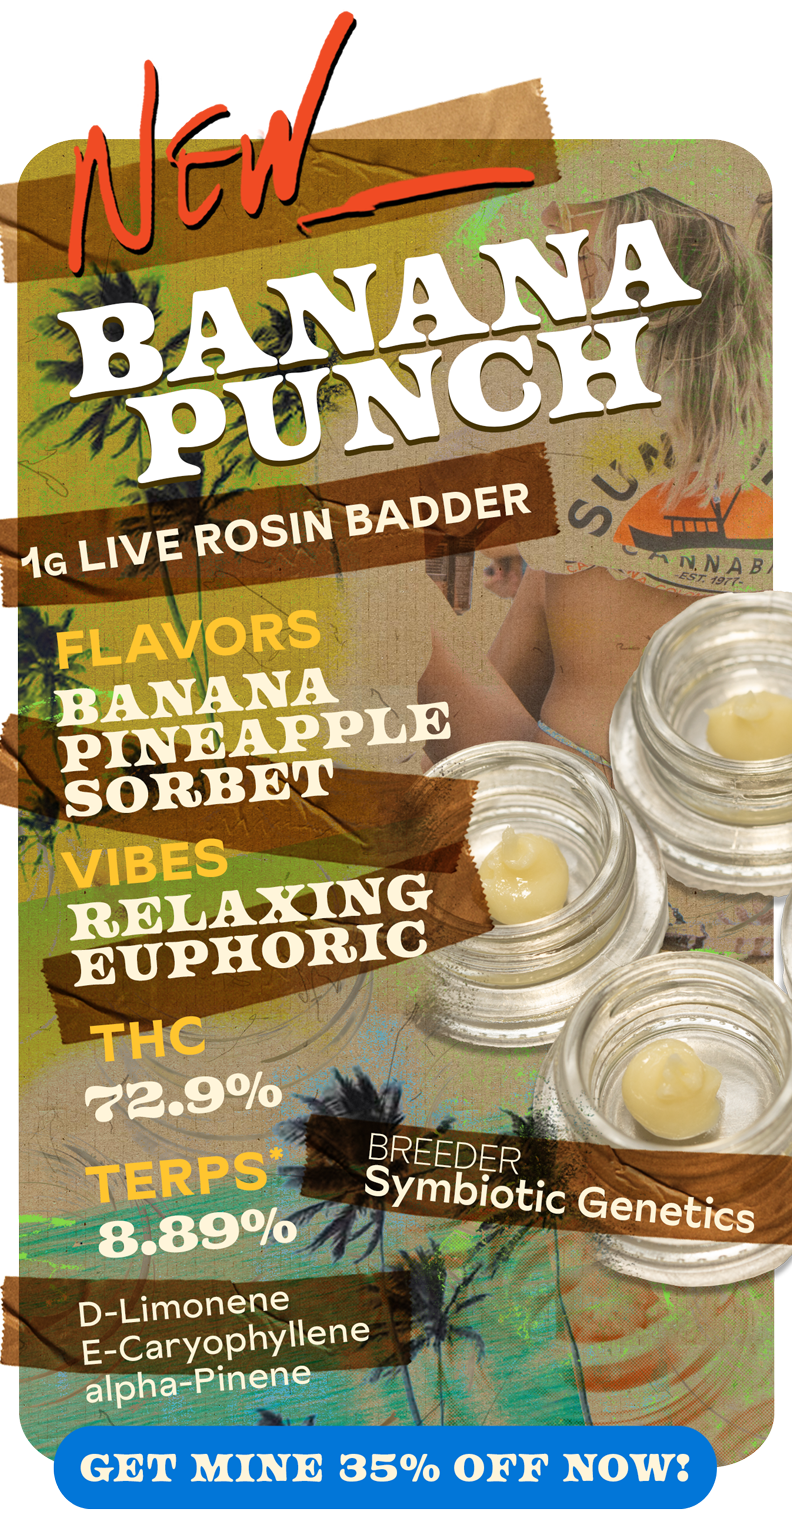 New Banana Punch 1G Live Rosin Badder